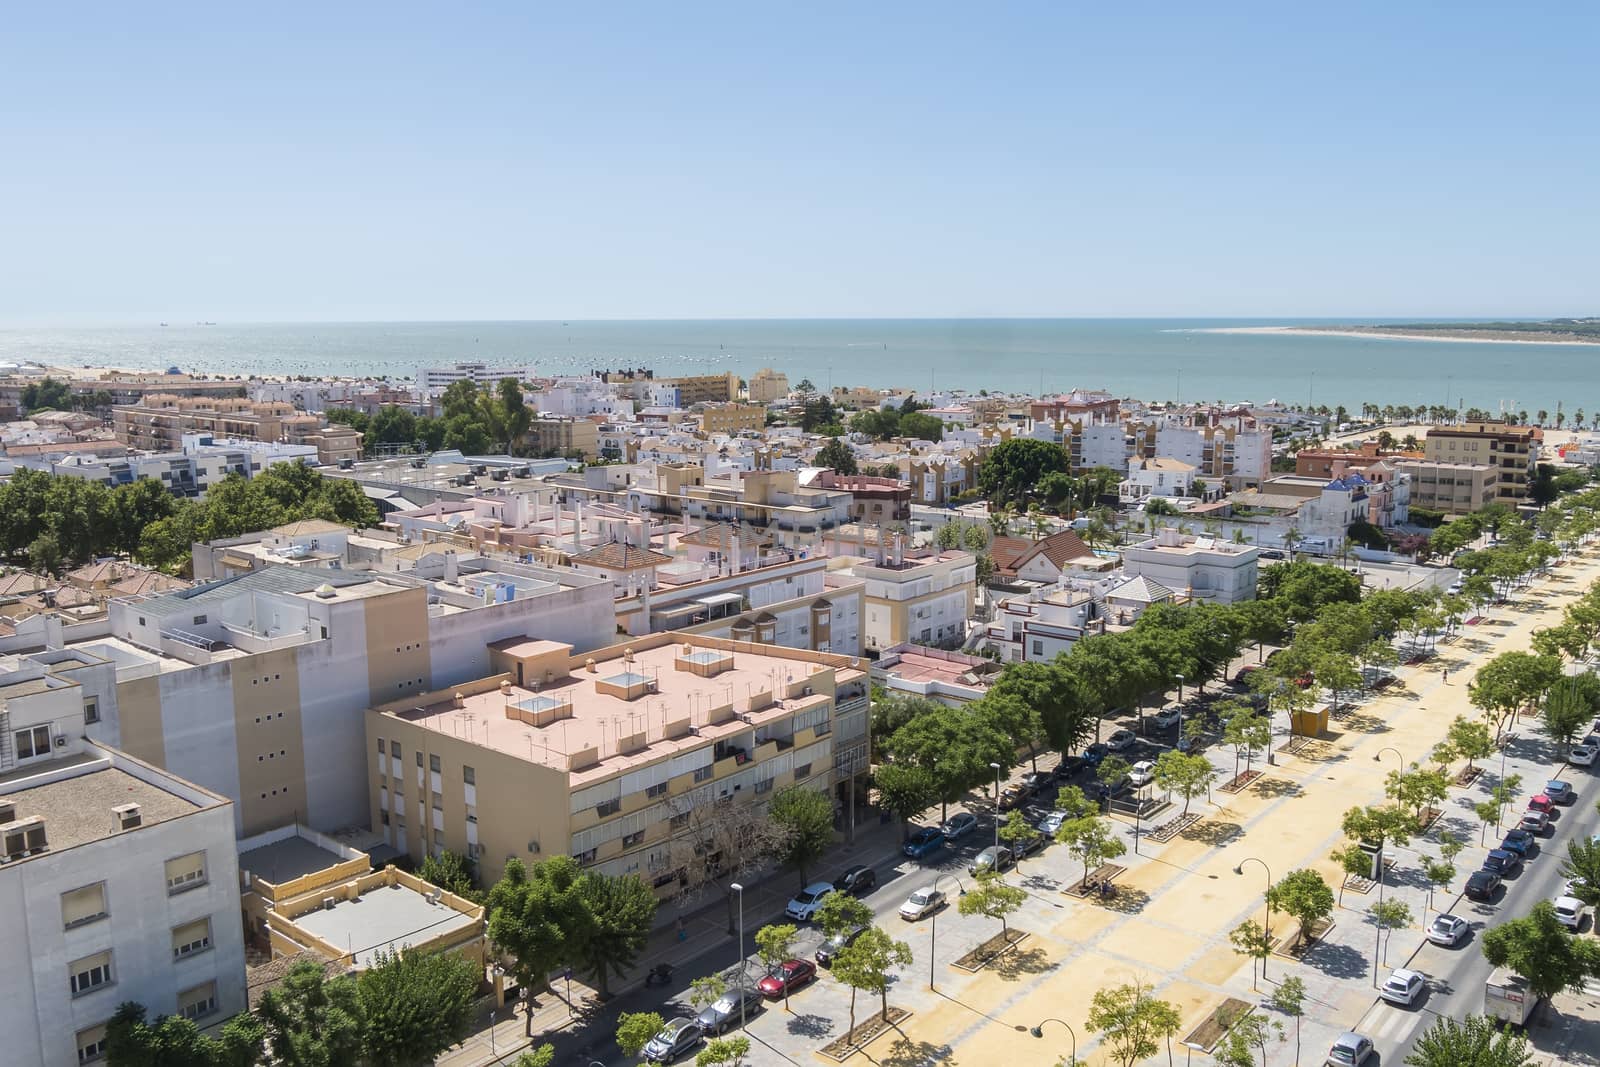 Sanlucar de Barrameda aereal view, Cadiz, Spain